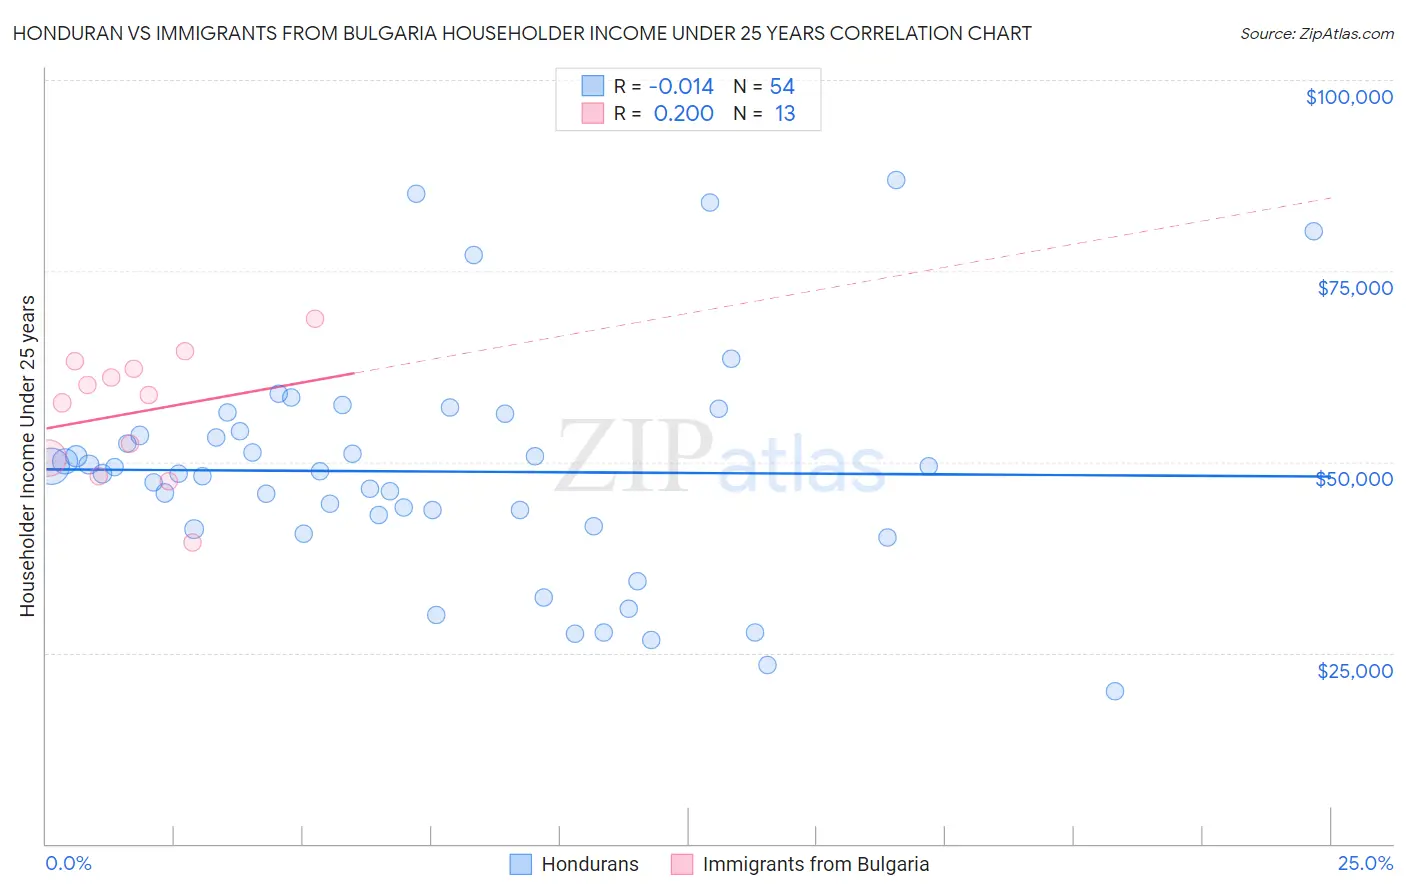 Honduran vs Immigrants from Bulgaria Householder Income Under 25 years